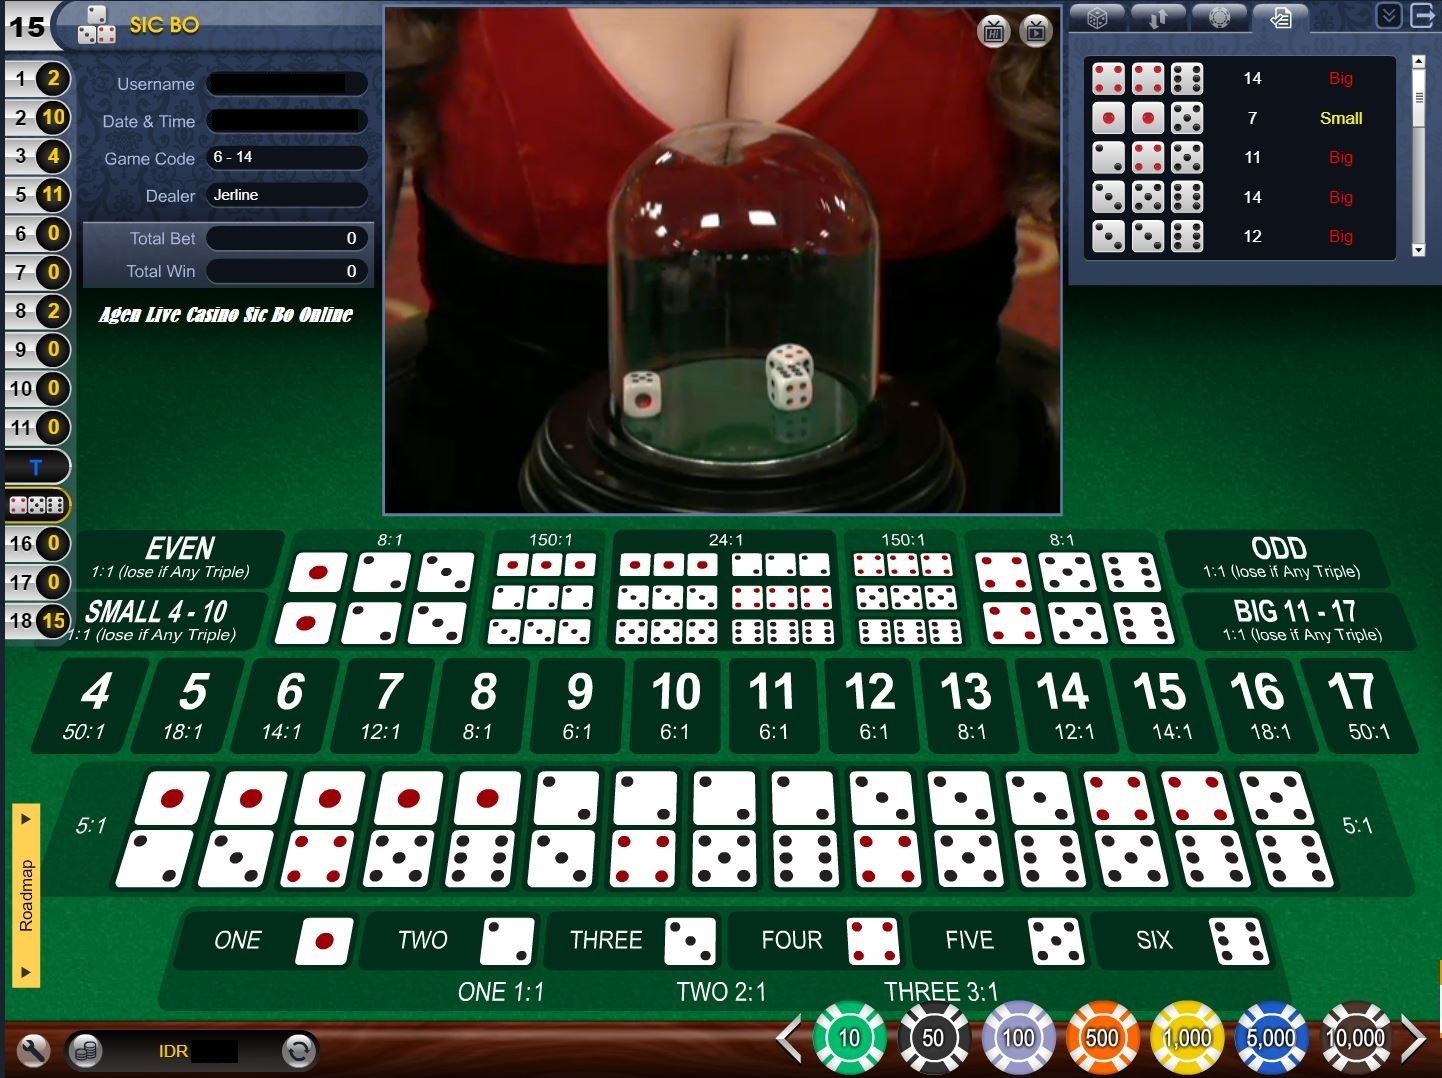 Agen Live Casino Sic Bo Online